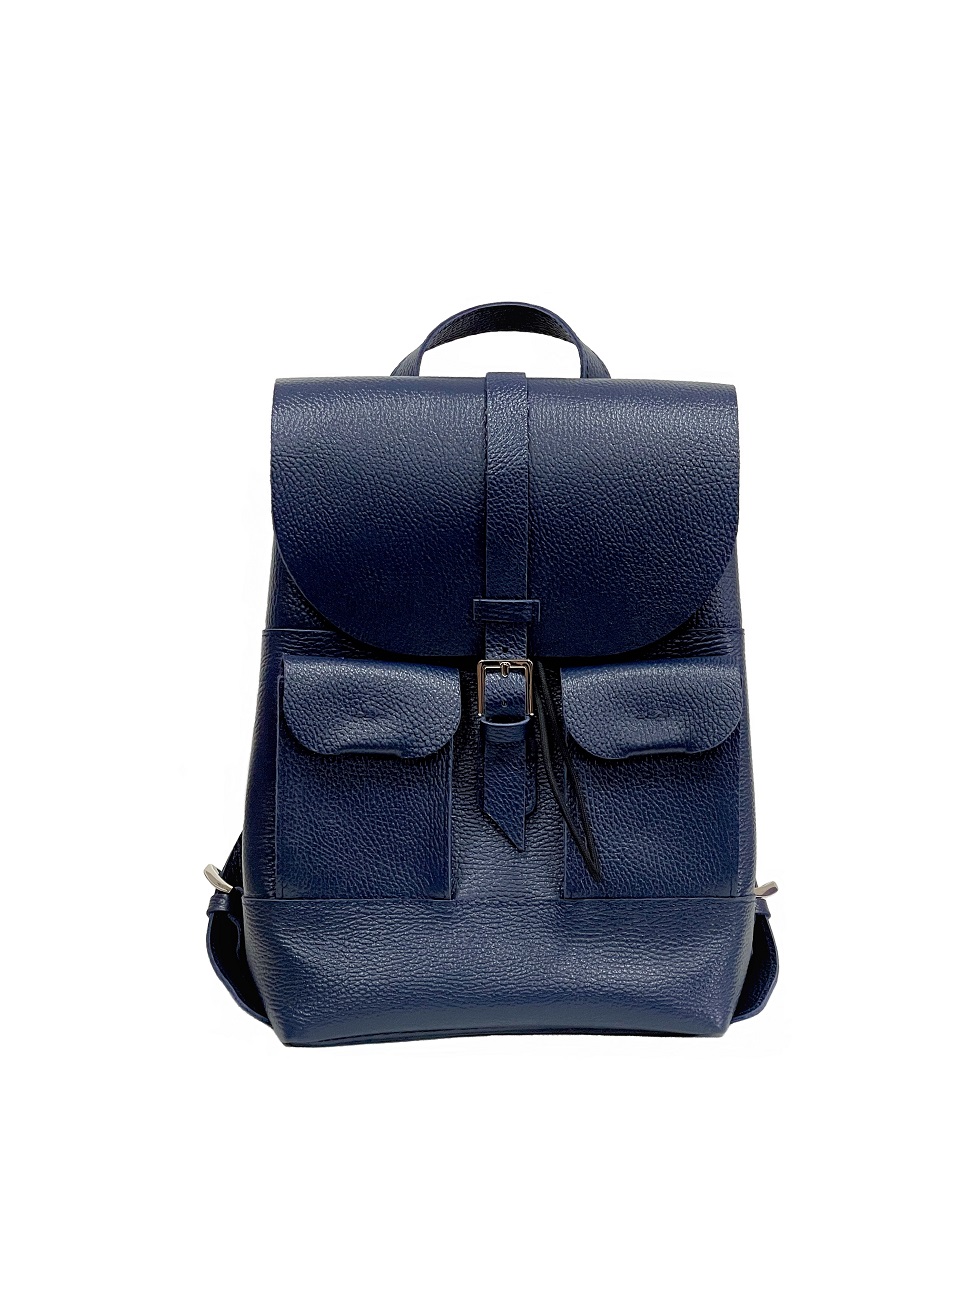 Женский кожаный рюкзак темно-синий B010 sapphire grain